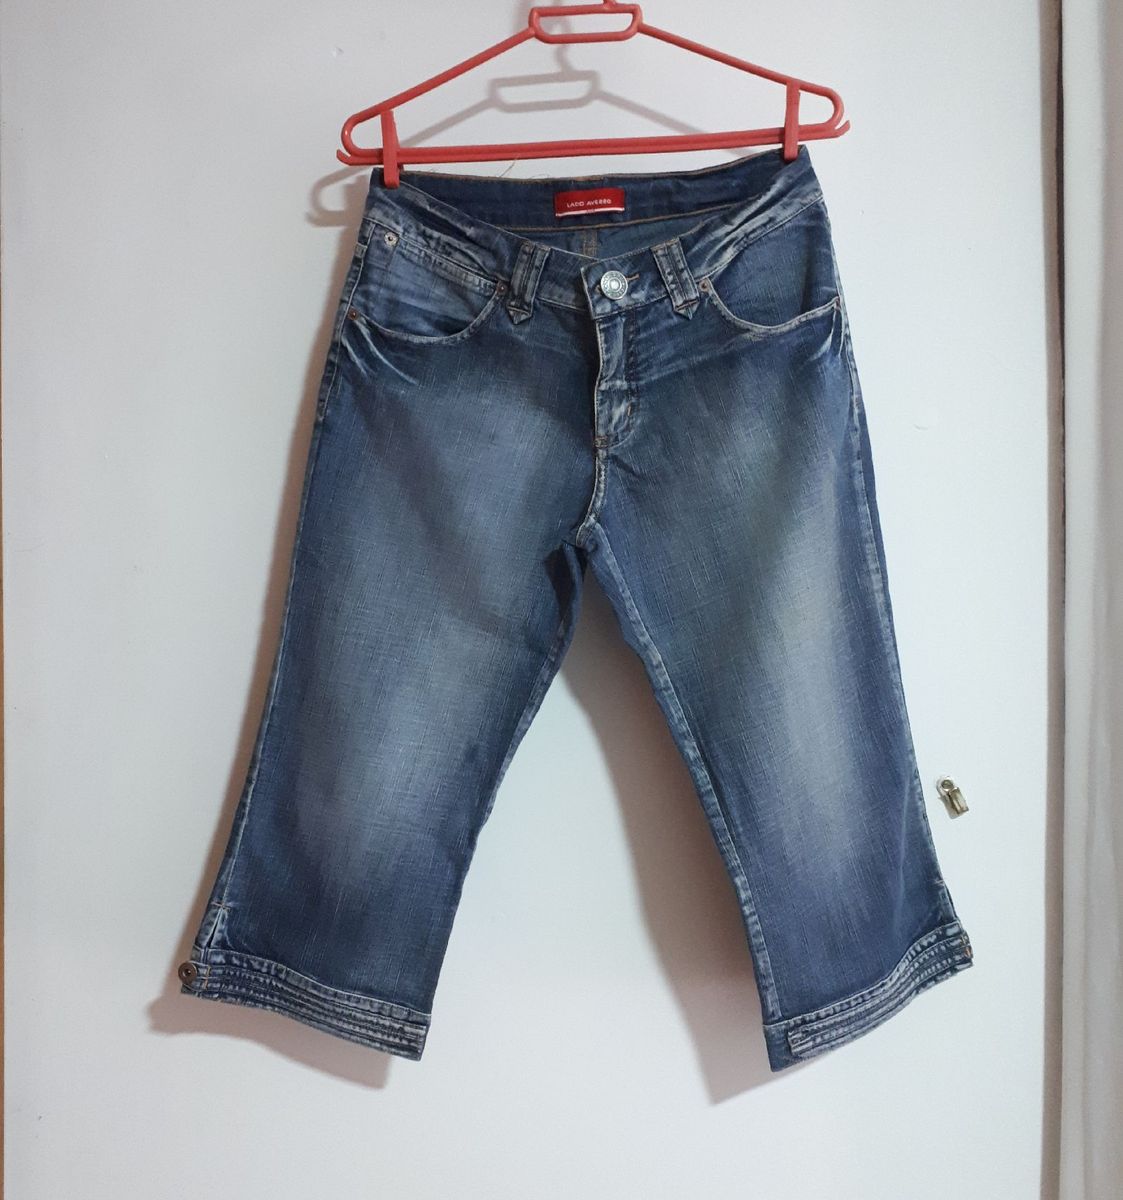 bermuda capri feminina jeans